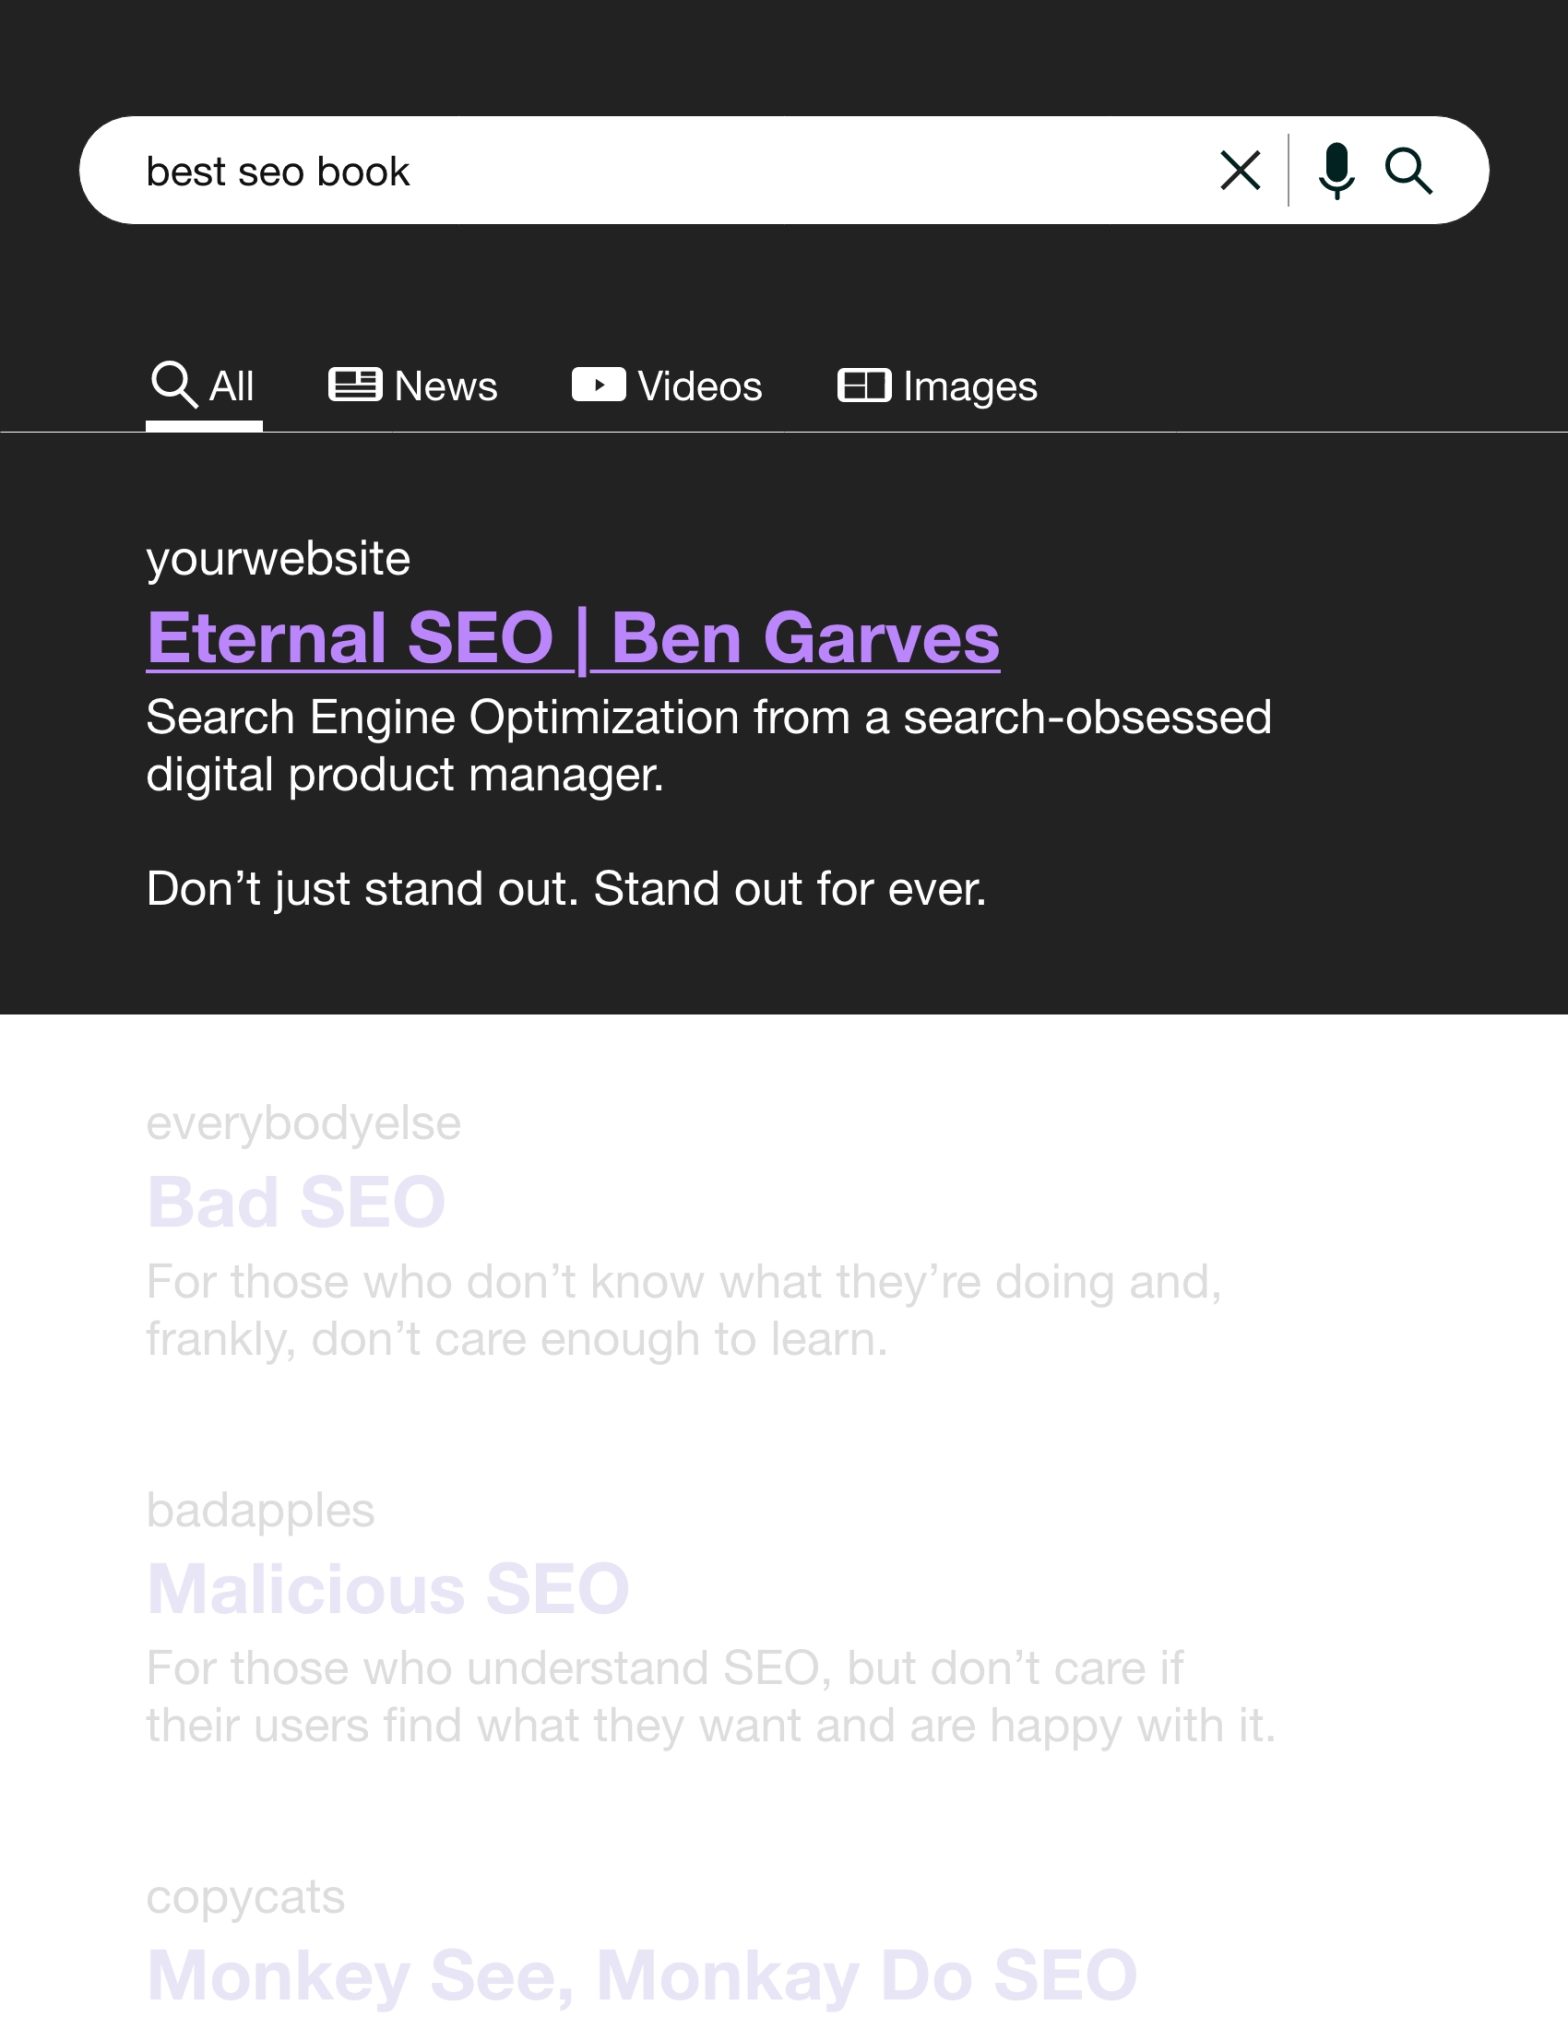 Eternal SEO: Timeless Search Engine Optimization